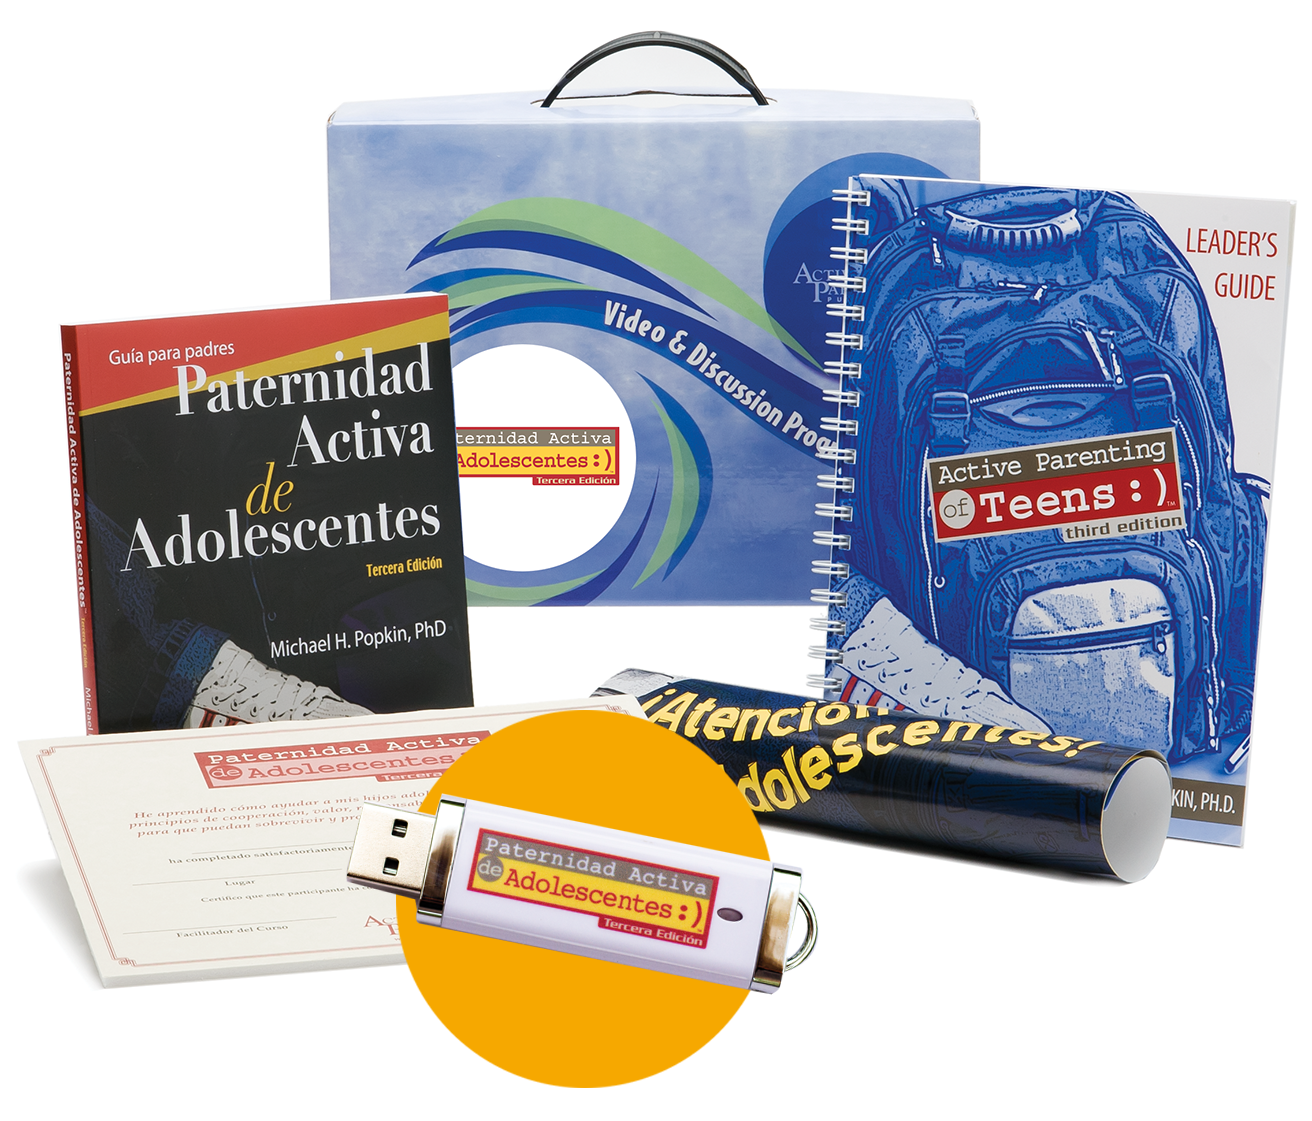 Paternidad Activa de Adolescentes (Active Parenting of Teens) Program Kit (Flash Drive)